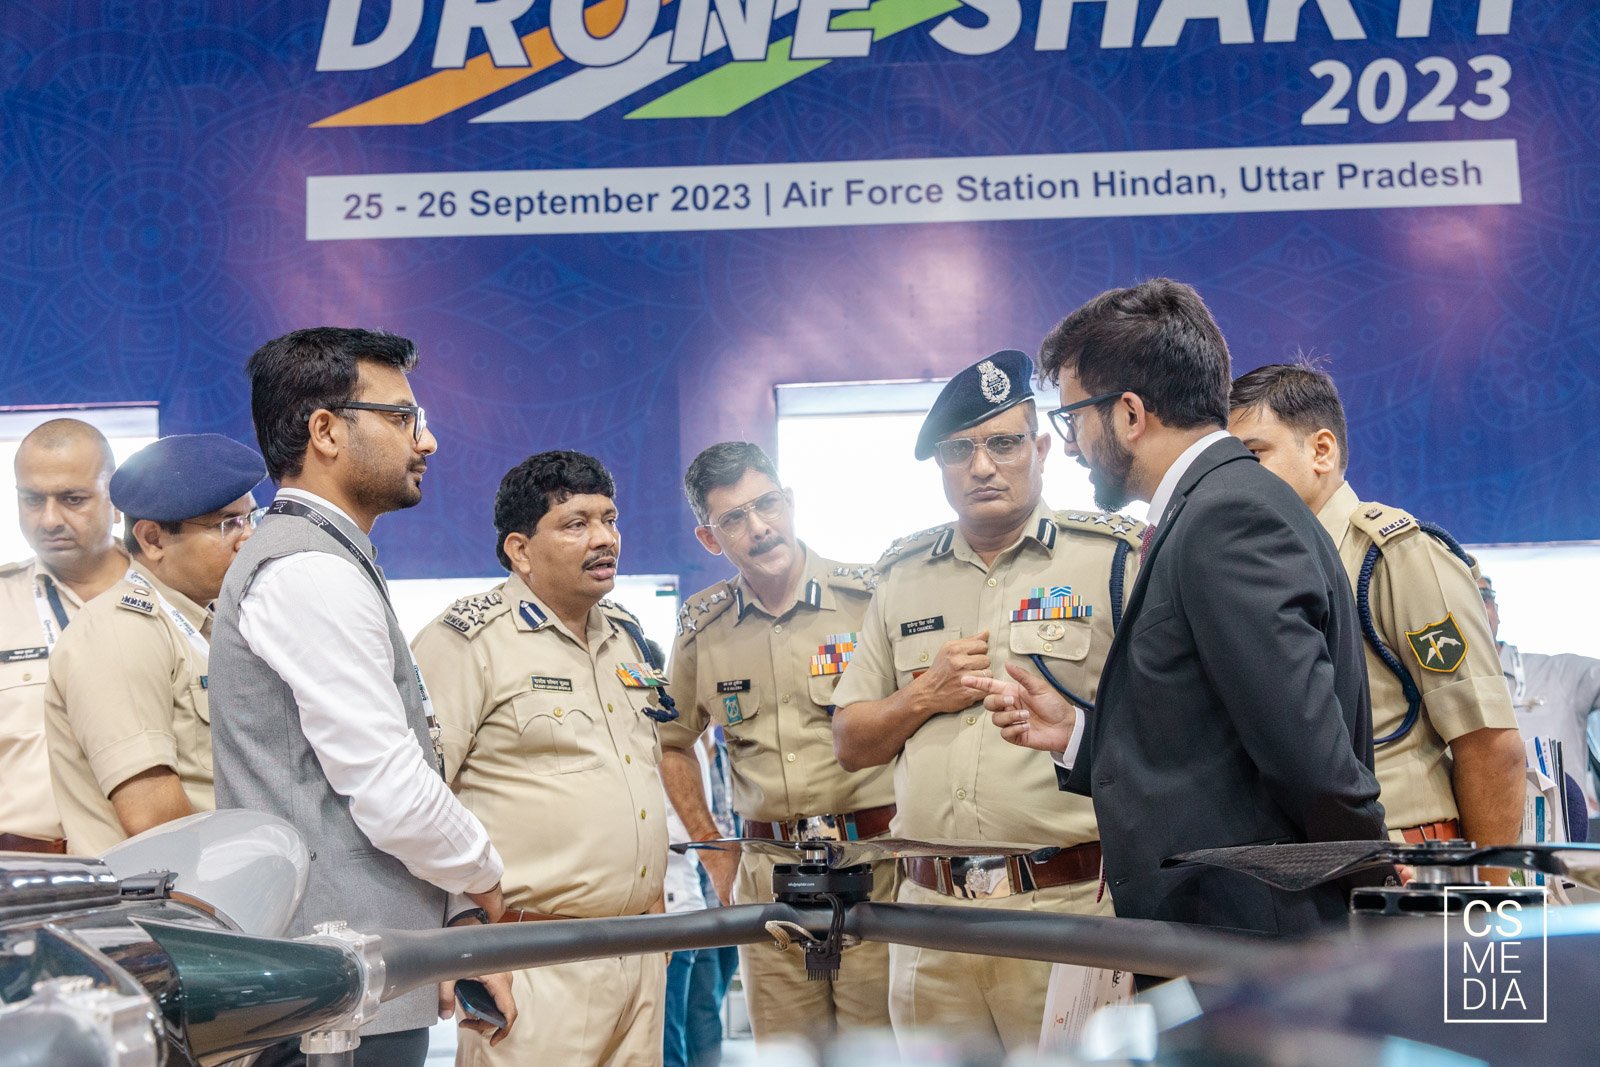 Top Corporate Photographers Delhi Indian Airforce Photography Drone Exhibition Photography 69